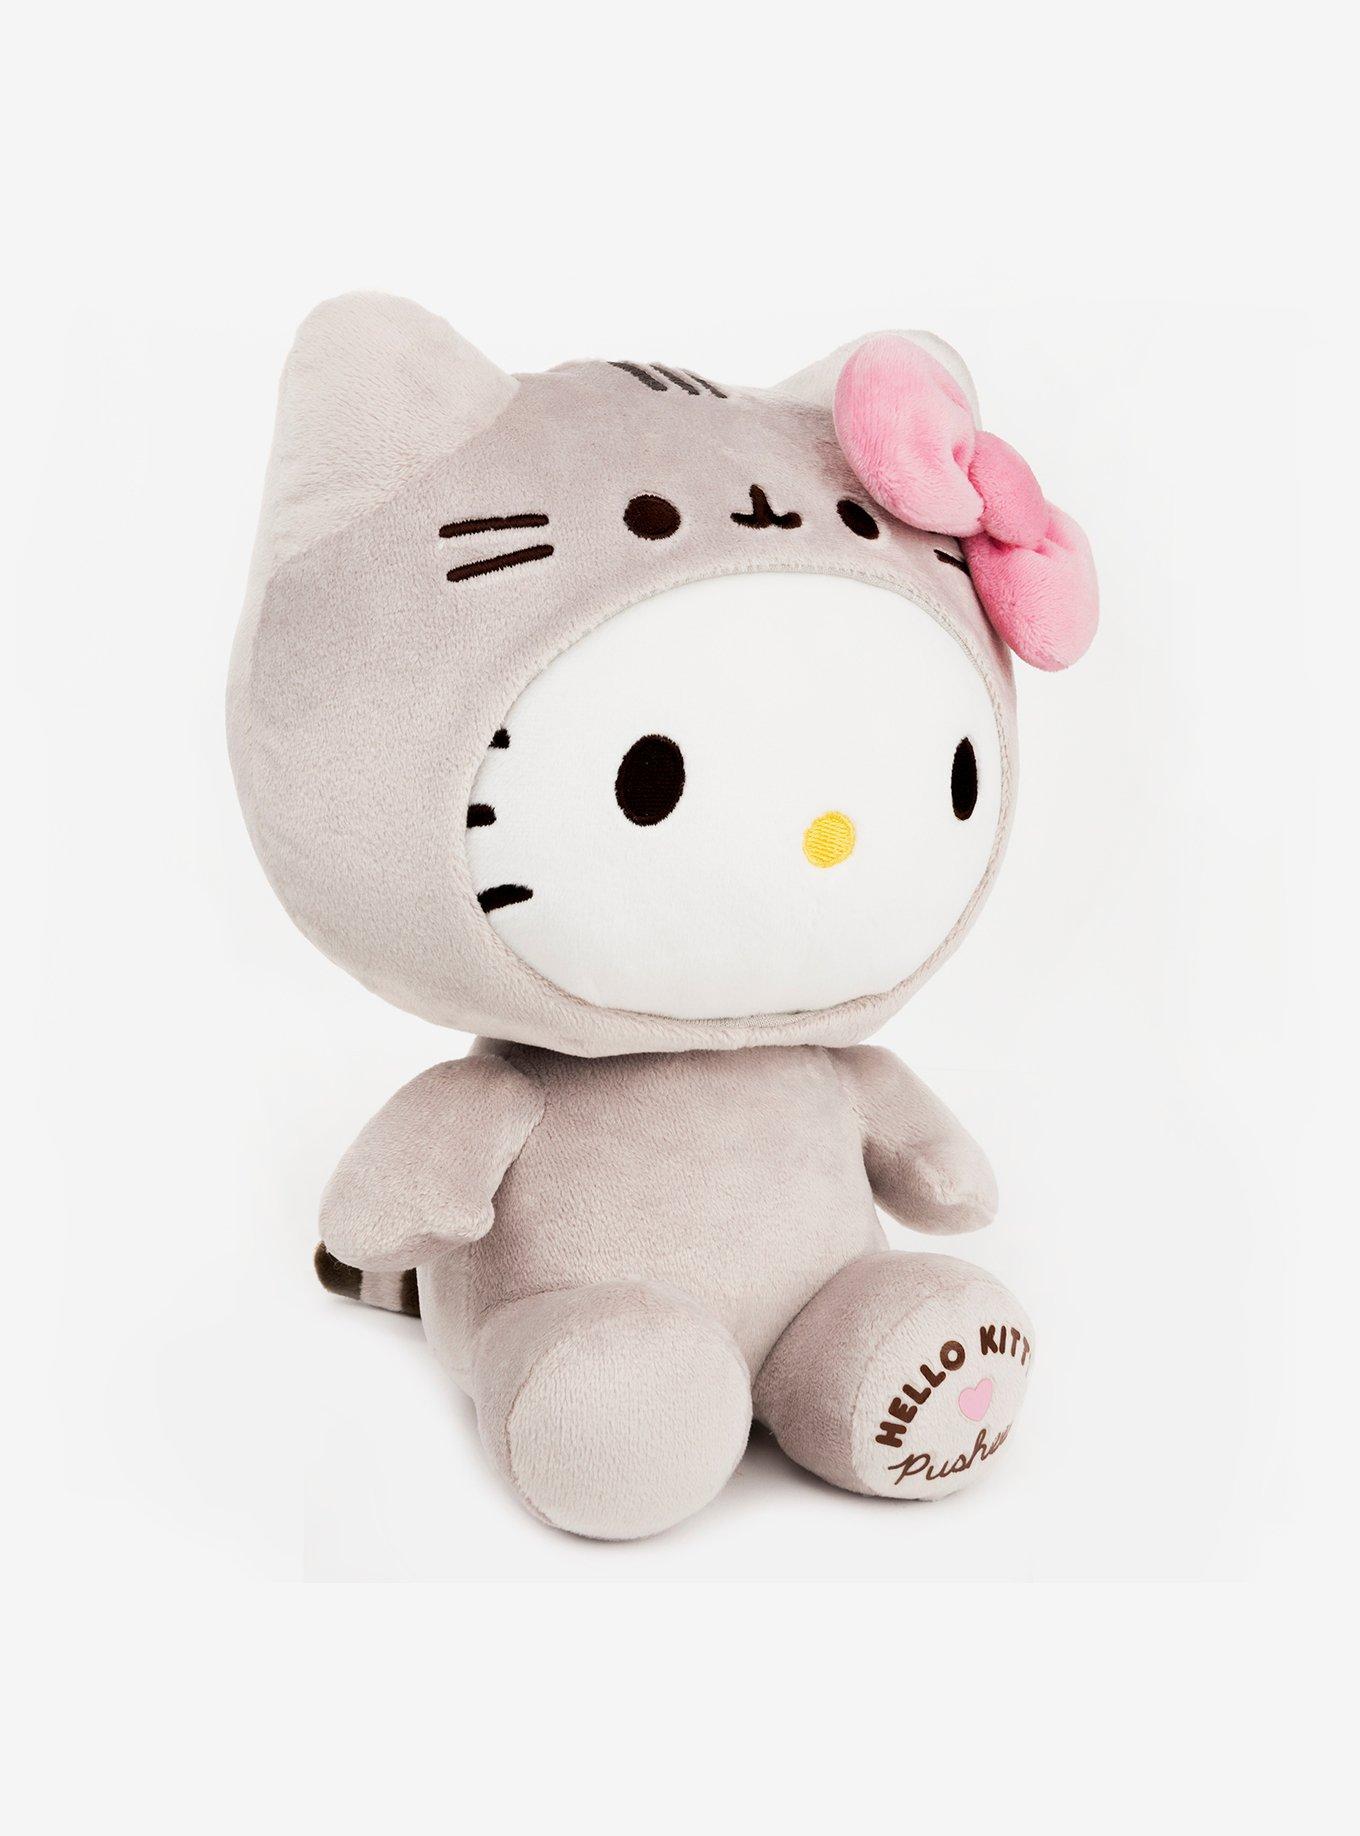 Hello Kitty x Pusheen - Hello Kitty wearing Pusheen onesie plush